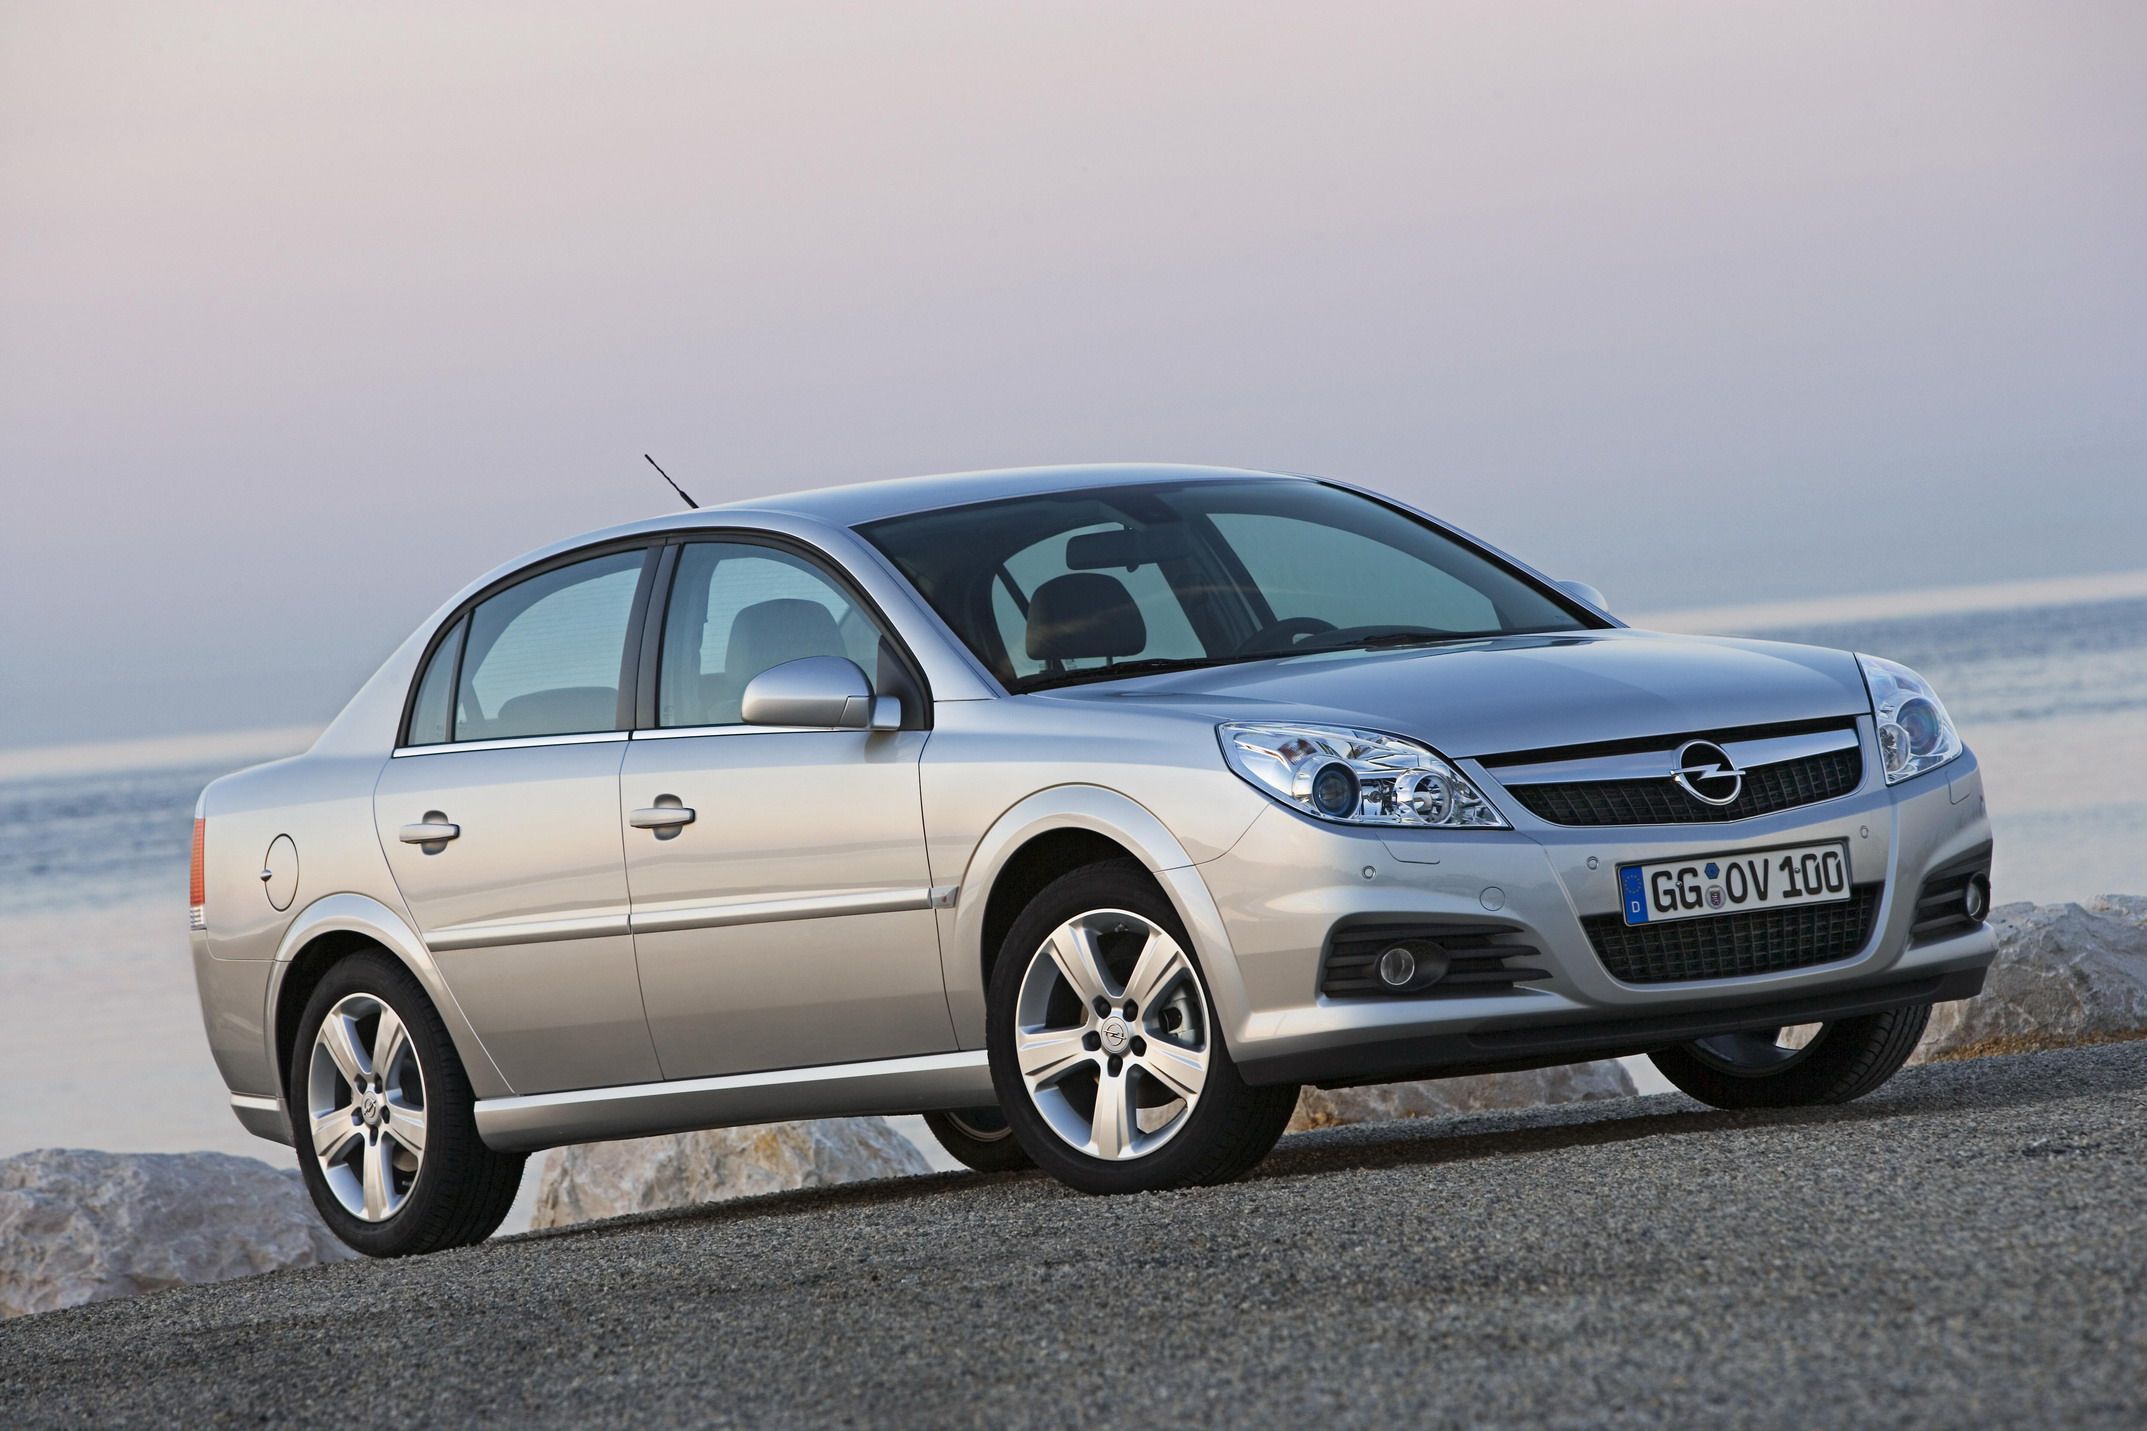 Opel Vectra C - Photos, News, Reviews, Specs, Car listings